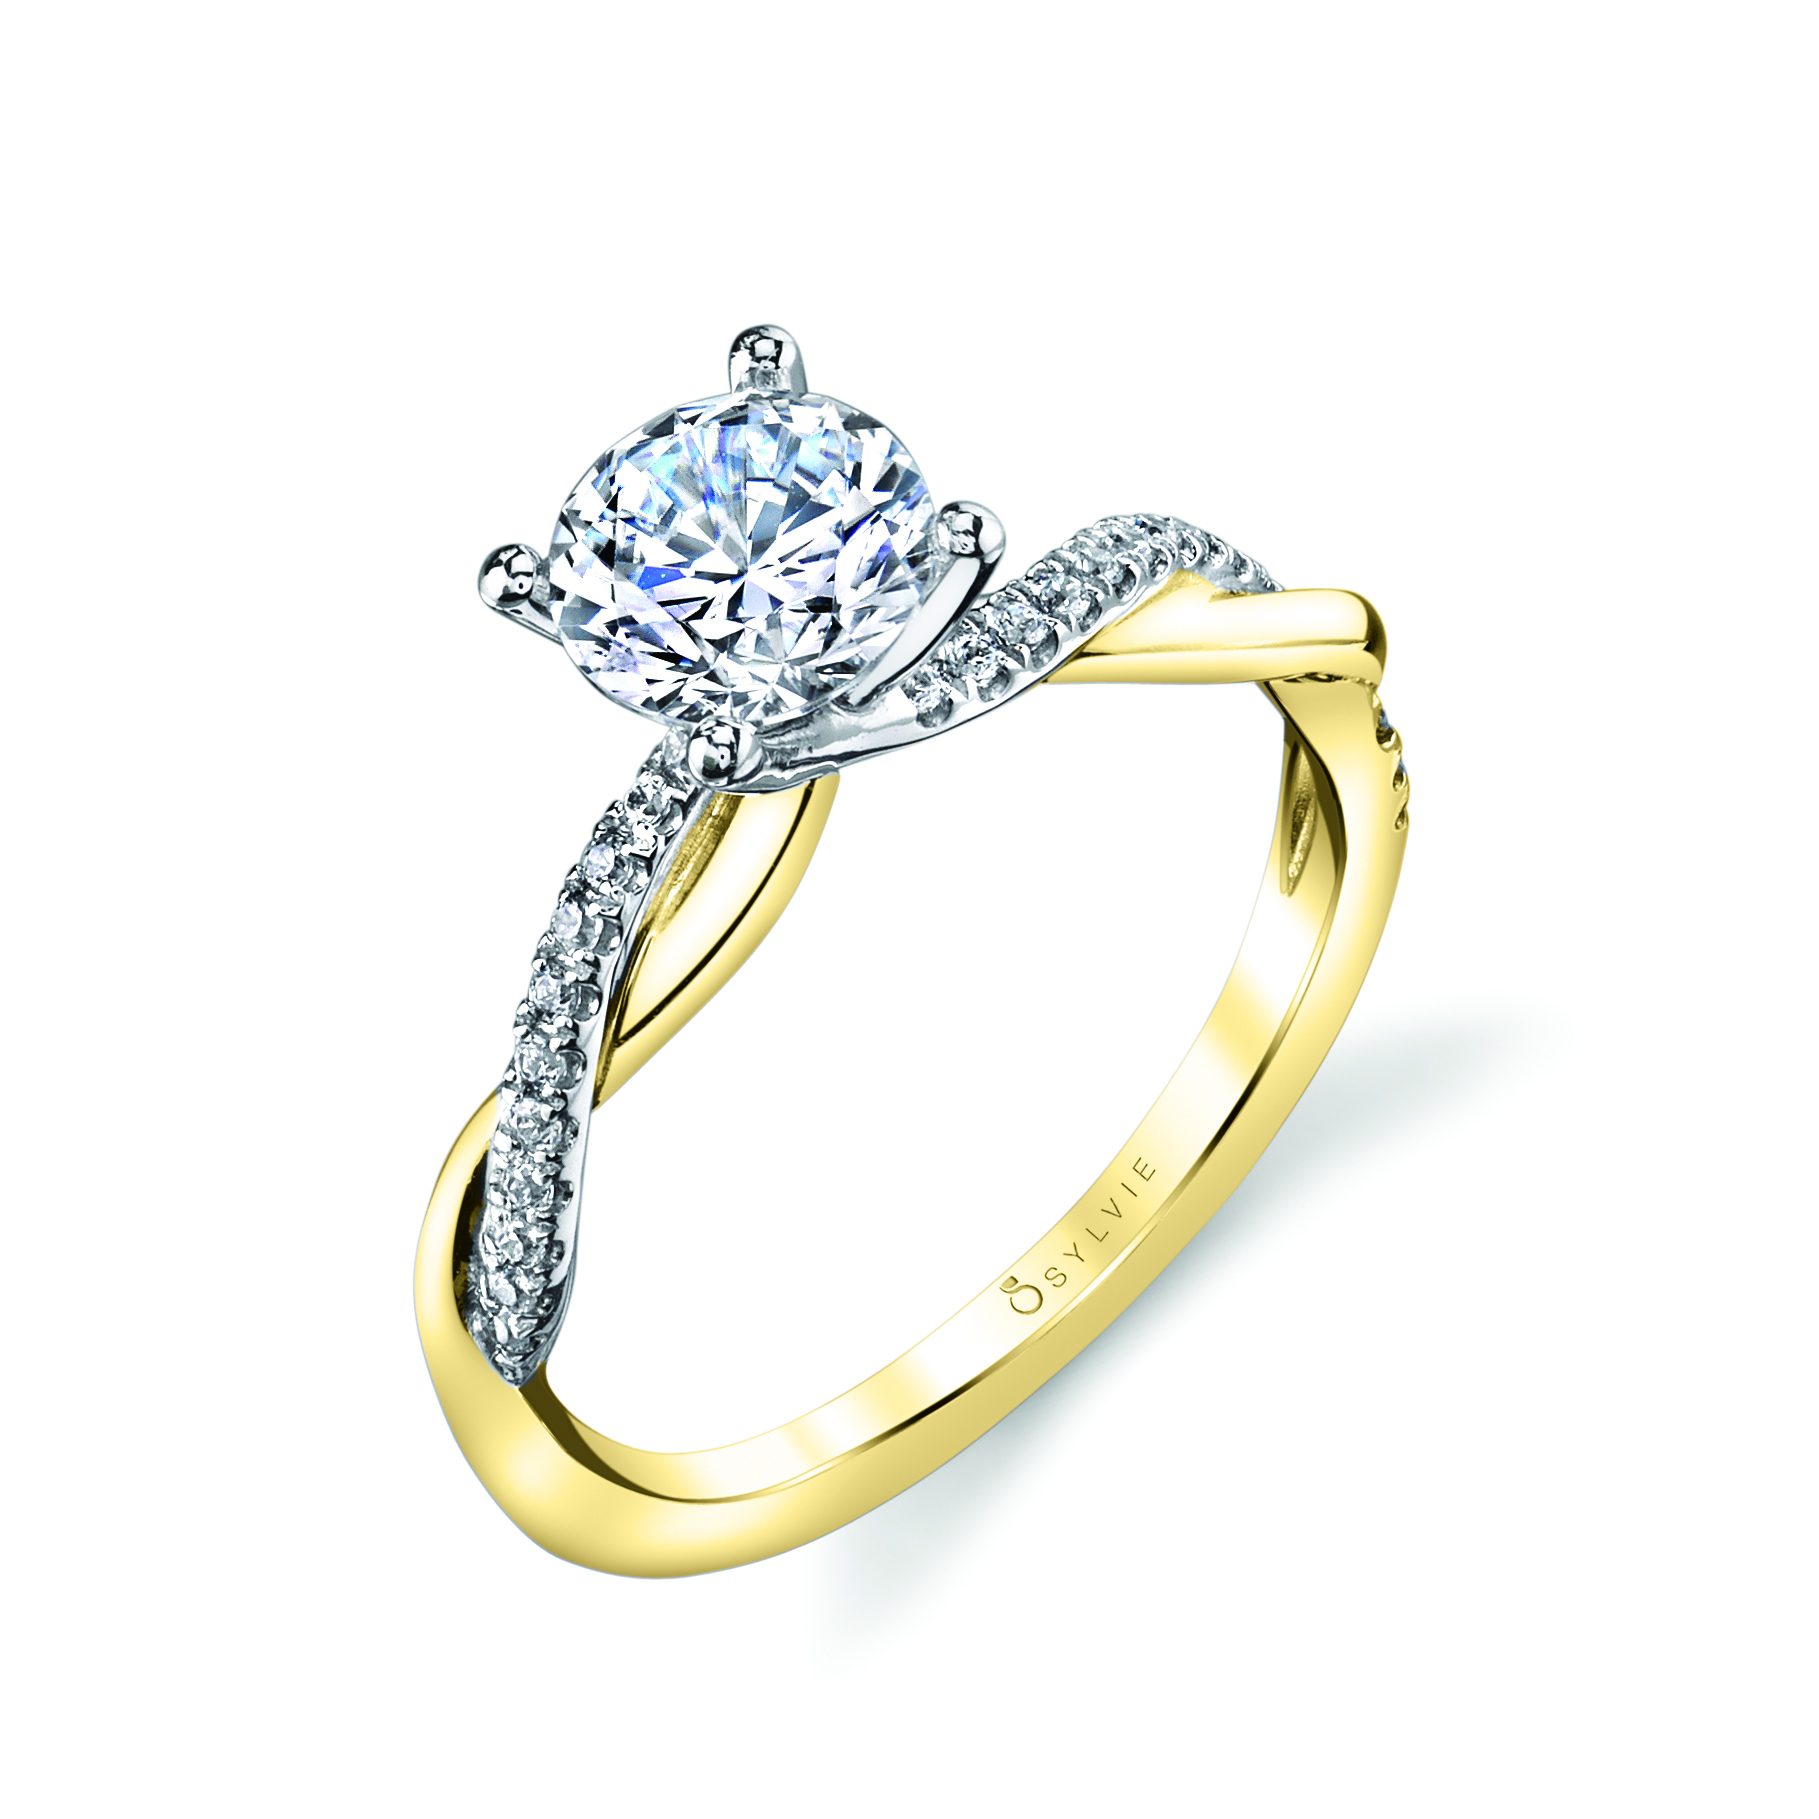 Spiral Engagement Ring - Yasmine Stuart Benjamin & Co. Jewelry Designs San Diego, CA